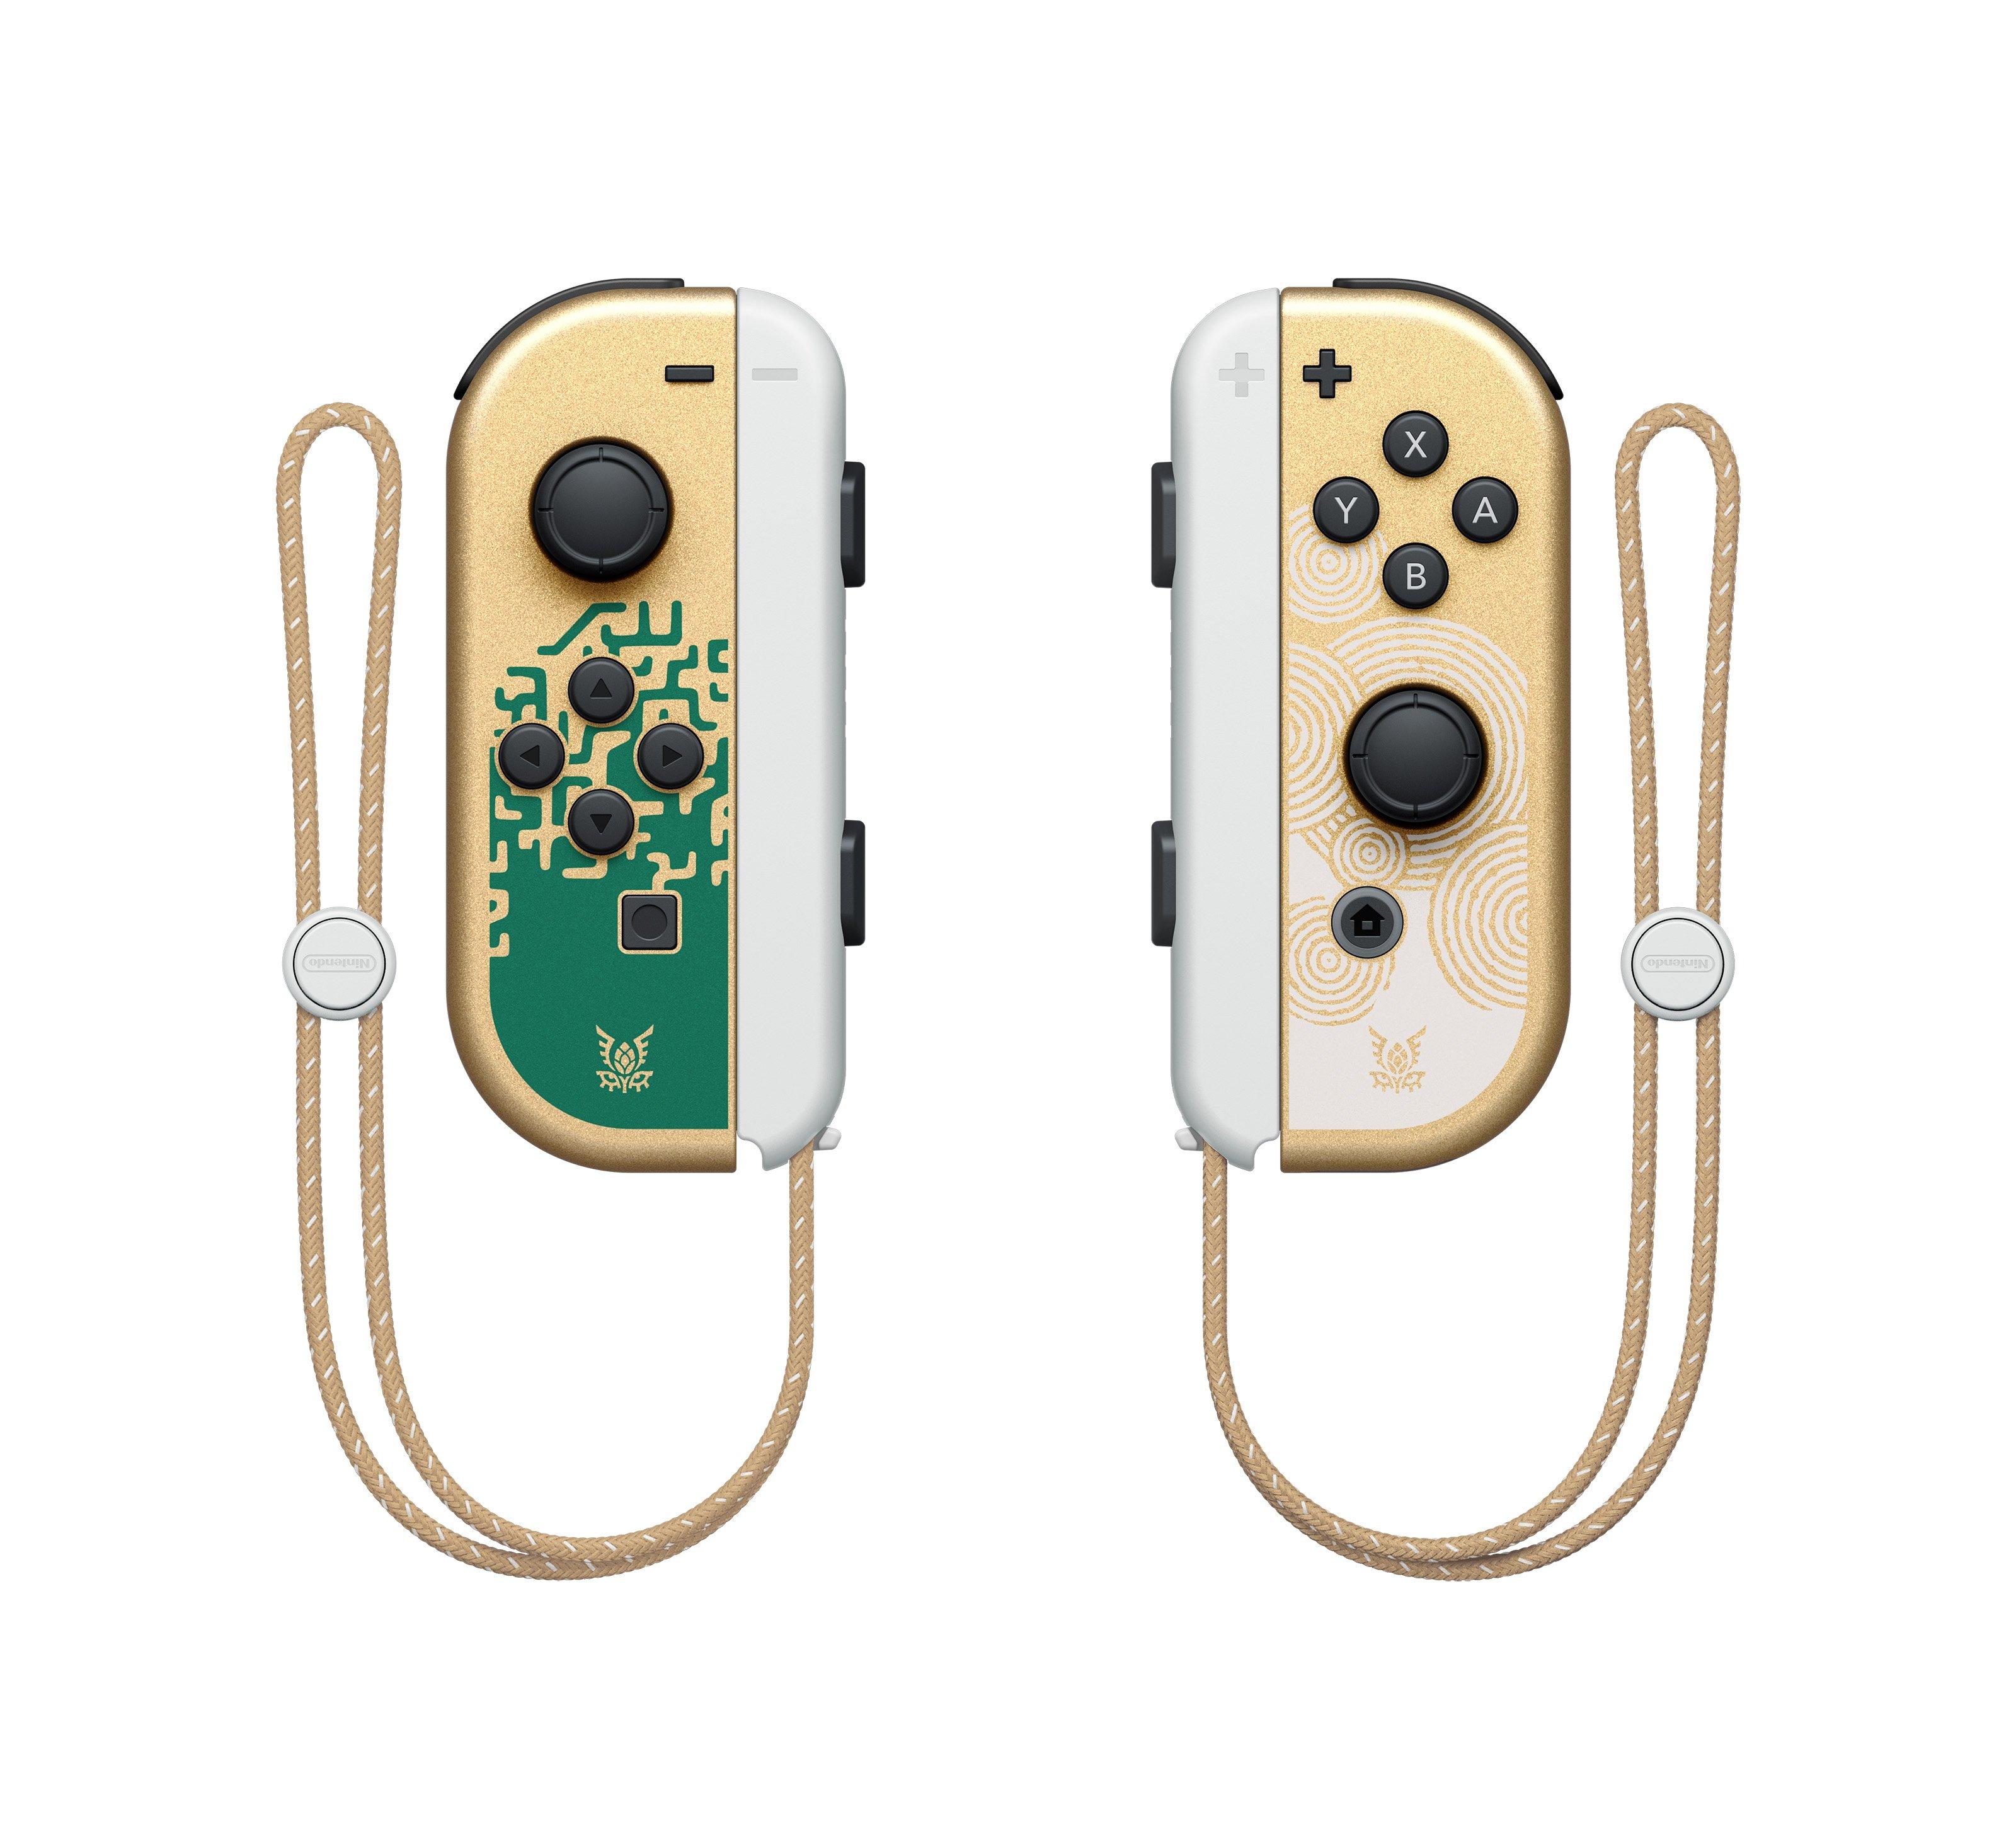 Nintendo Switch OLED The Legend of Zelda Tears of the Kingdom Game